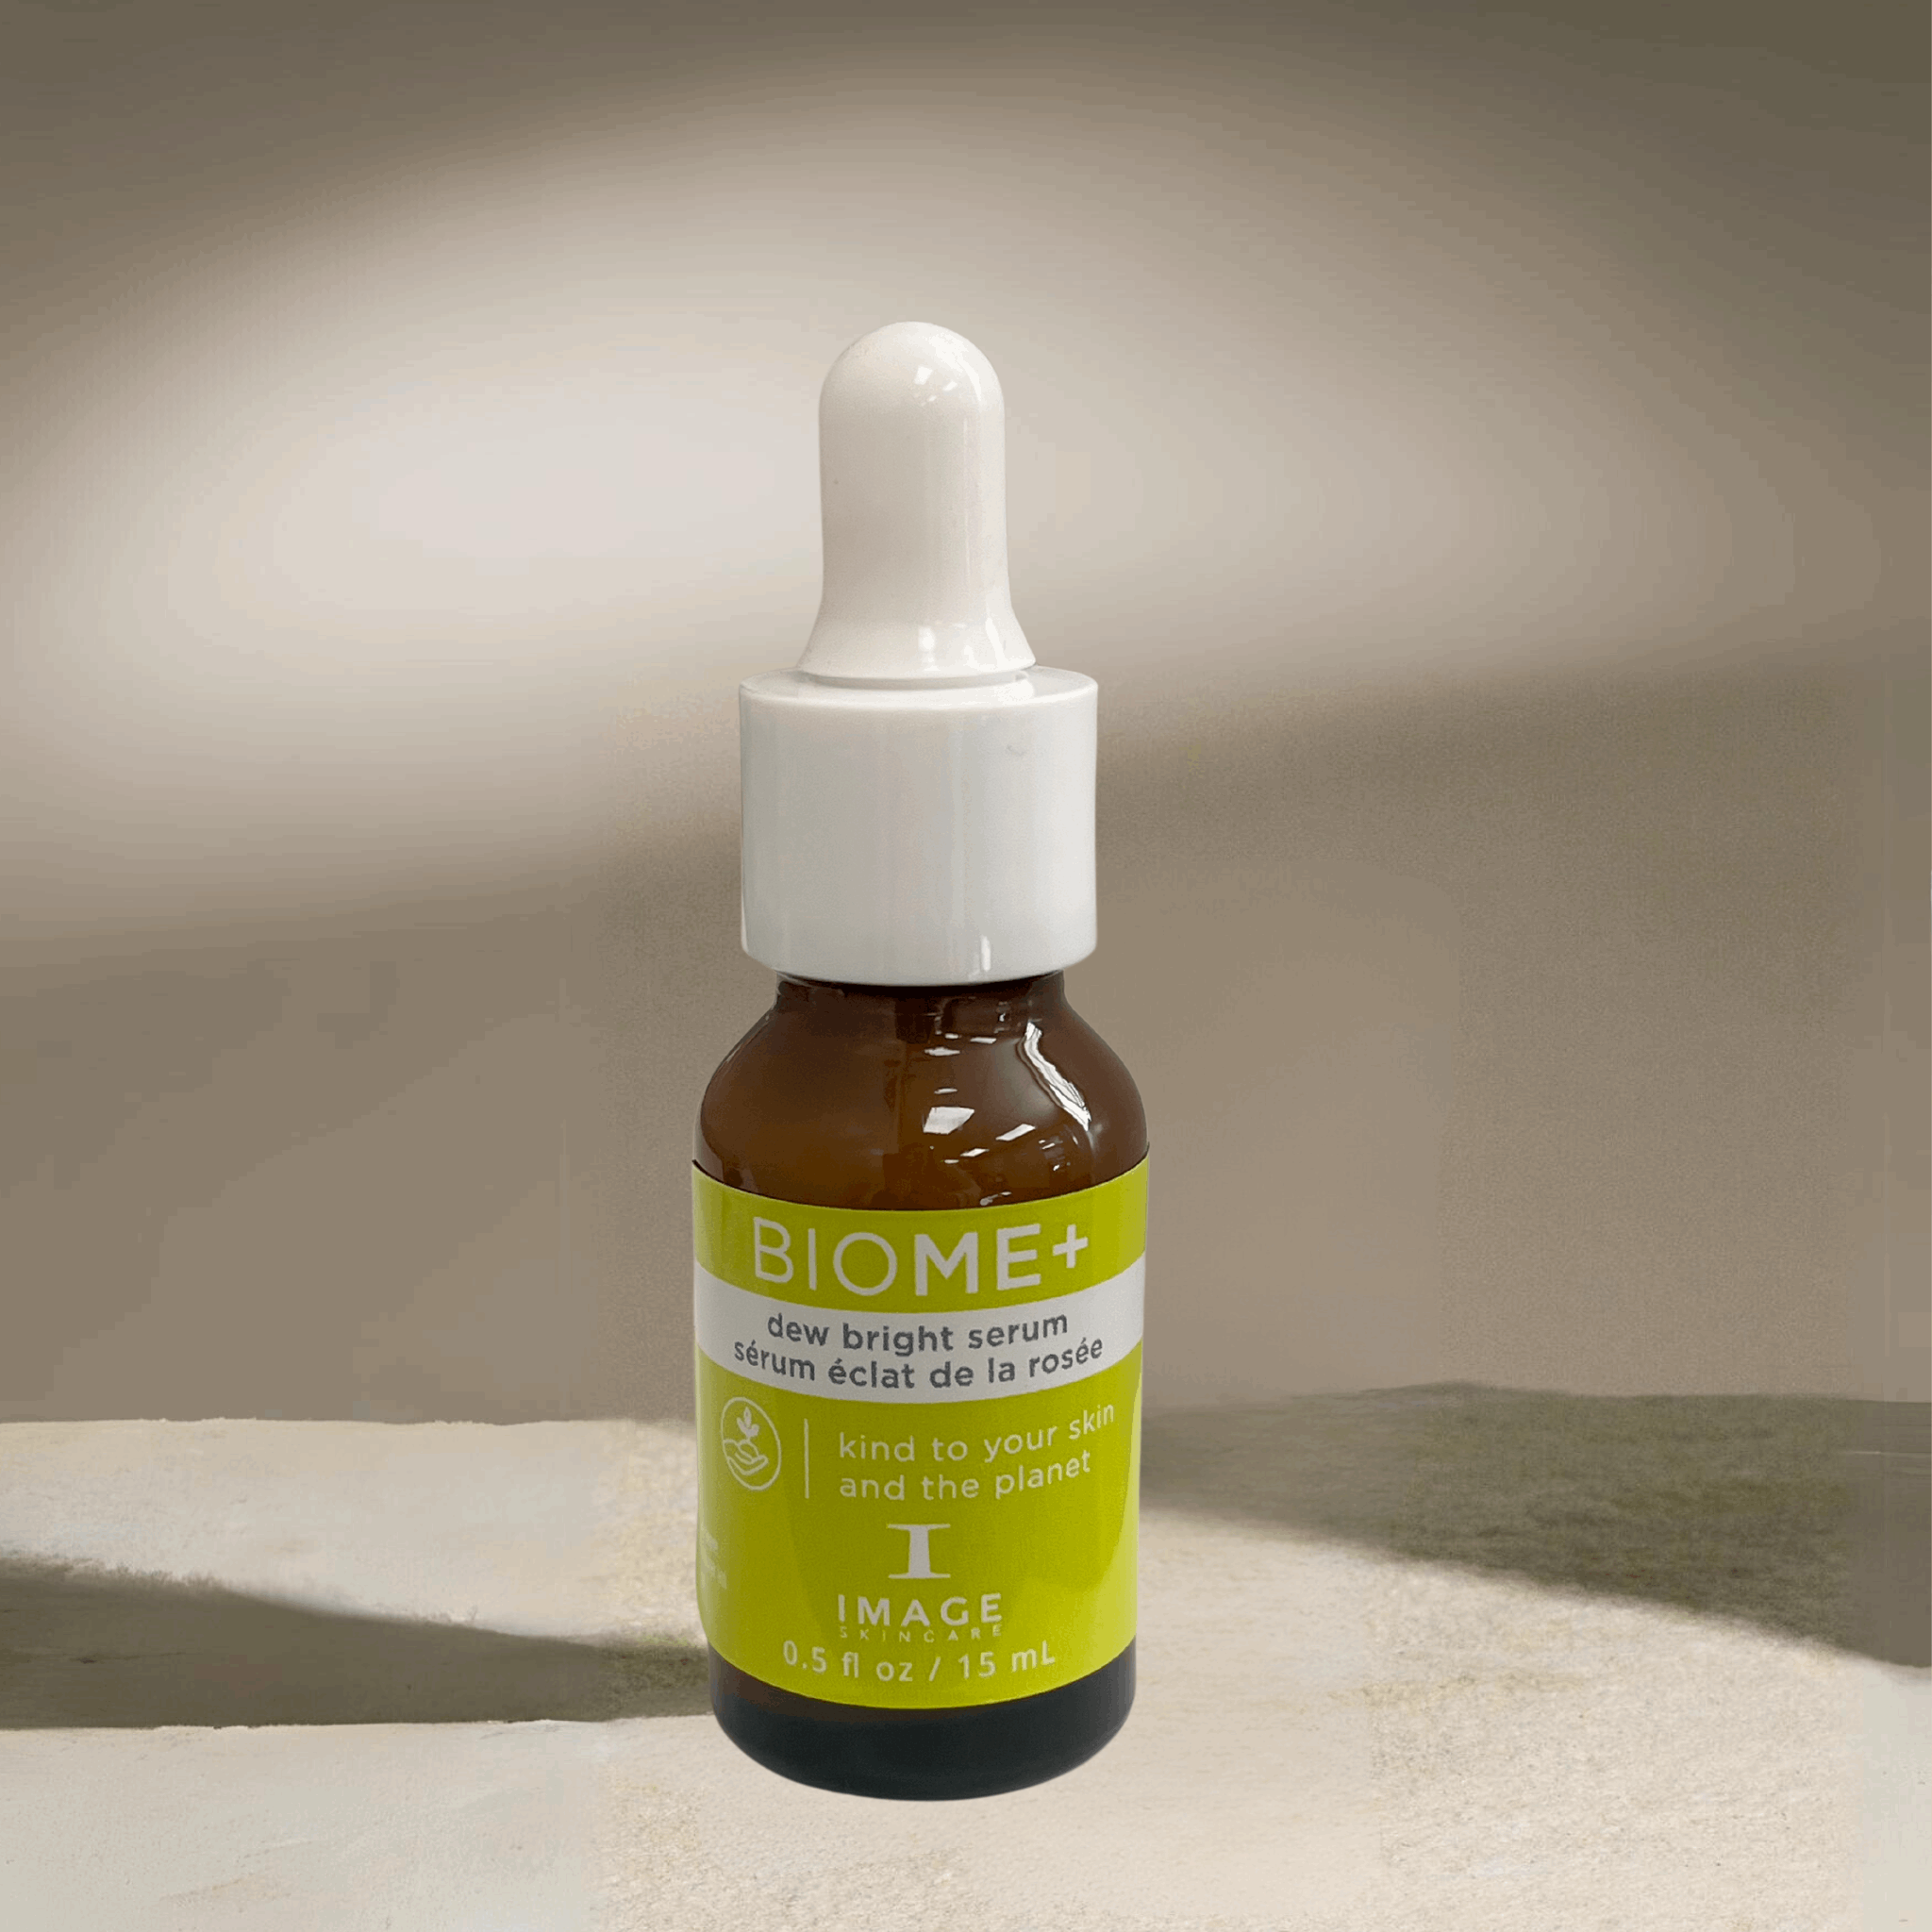 Biome+ Dew Bright Serum **Discovery Size** Image Skincare